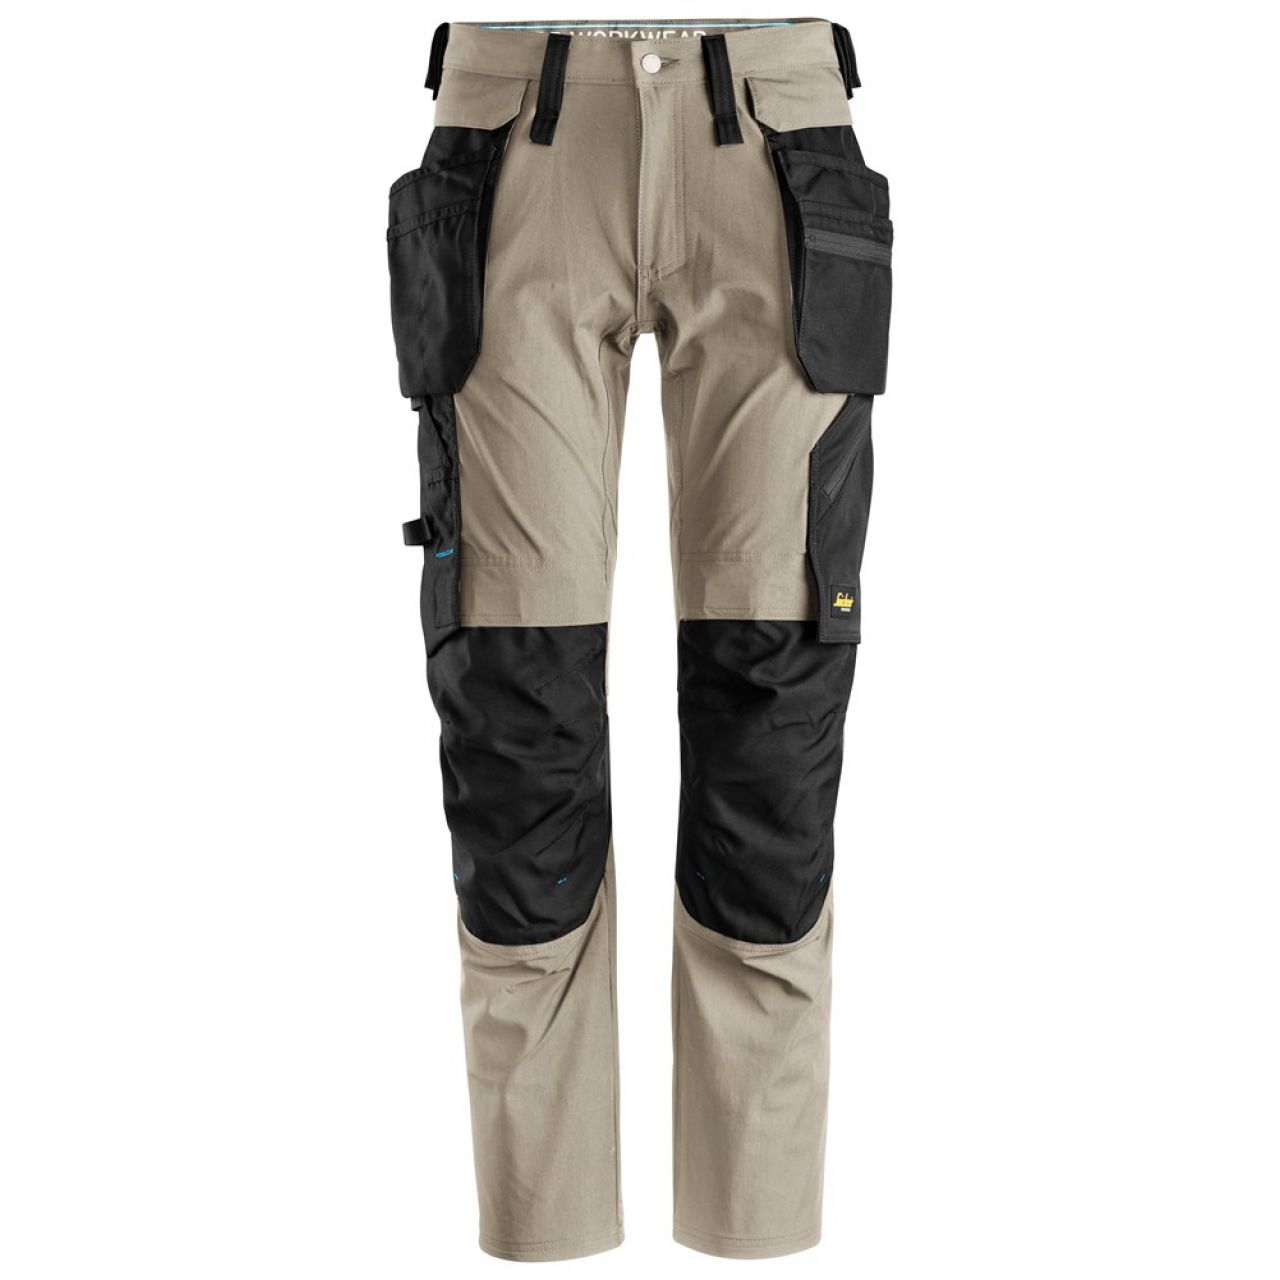 6208 Pantalones largos de trabajo con bolsillos flotantes desmontables LiteWork beige-negro talla 92